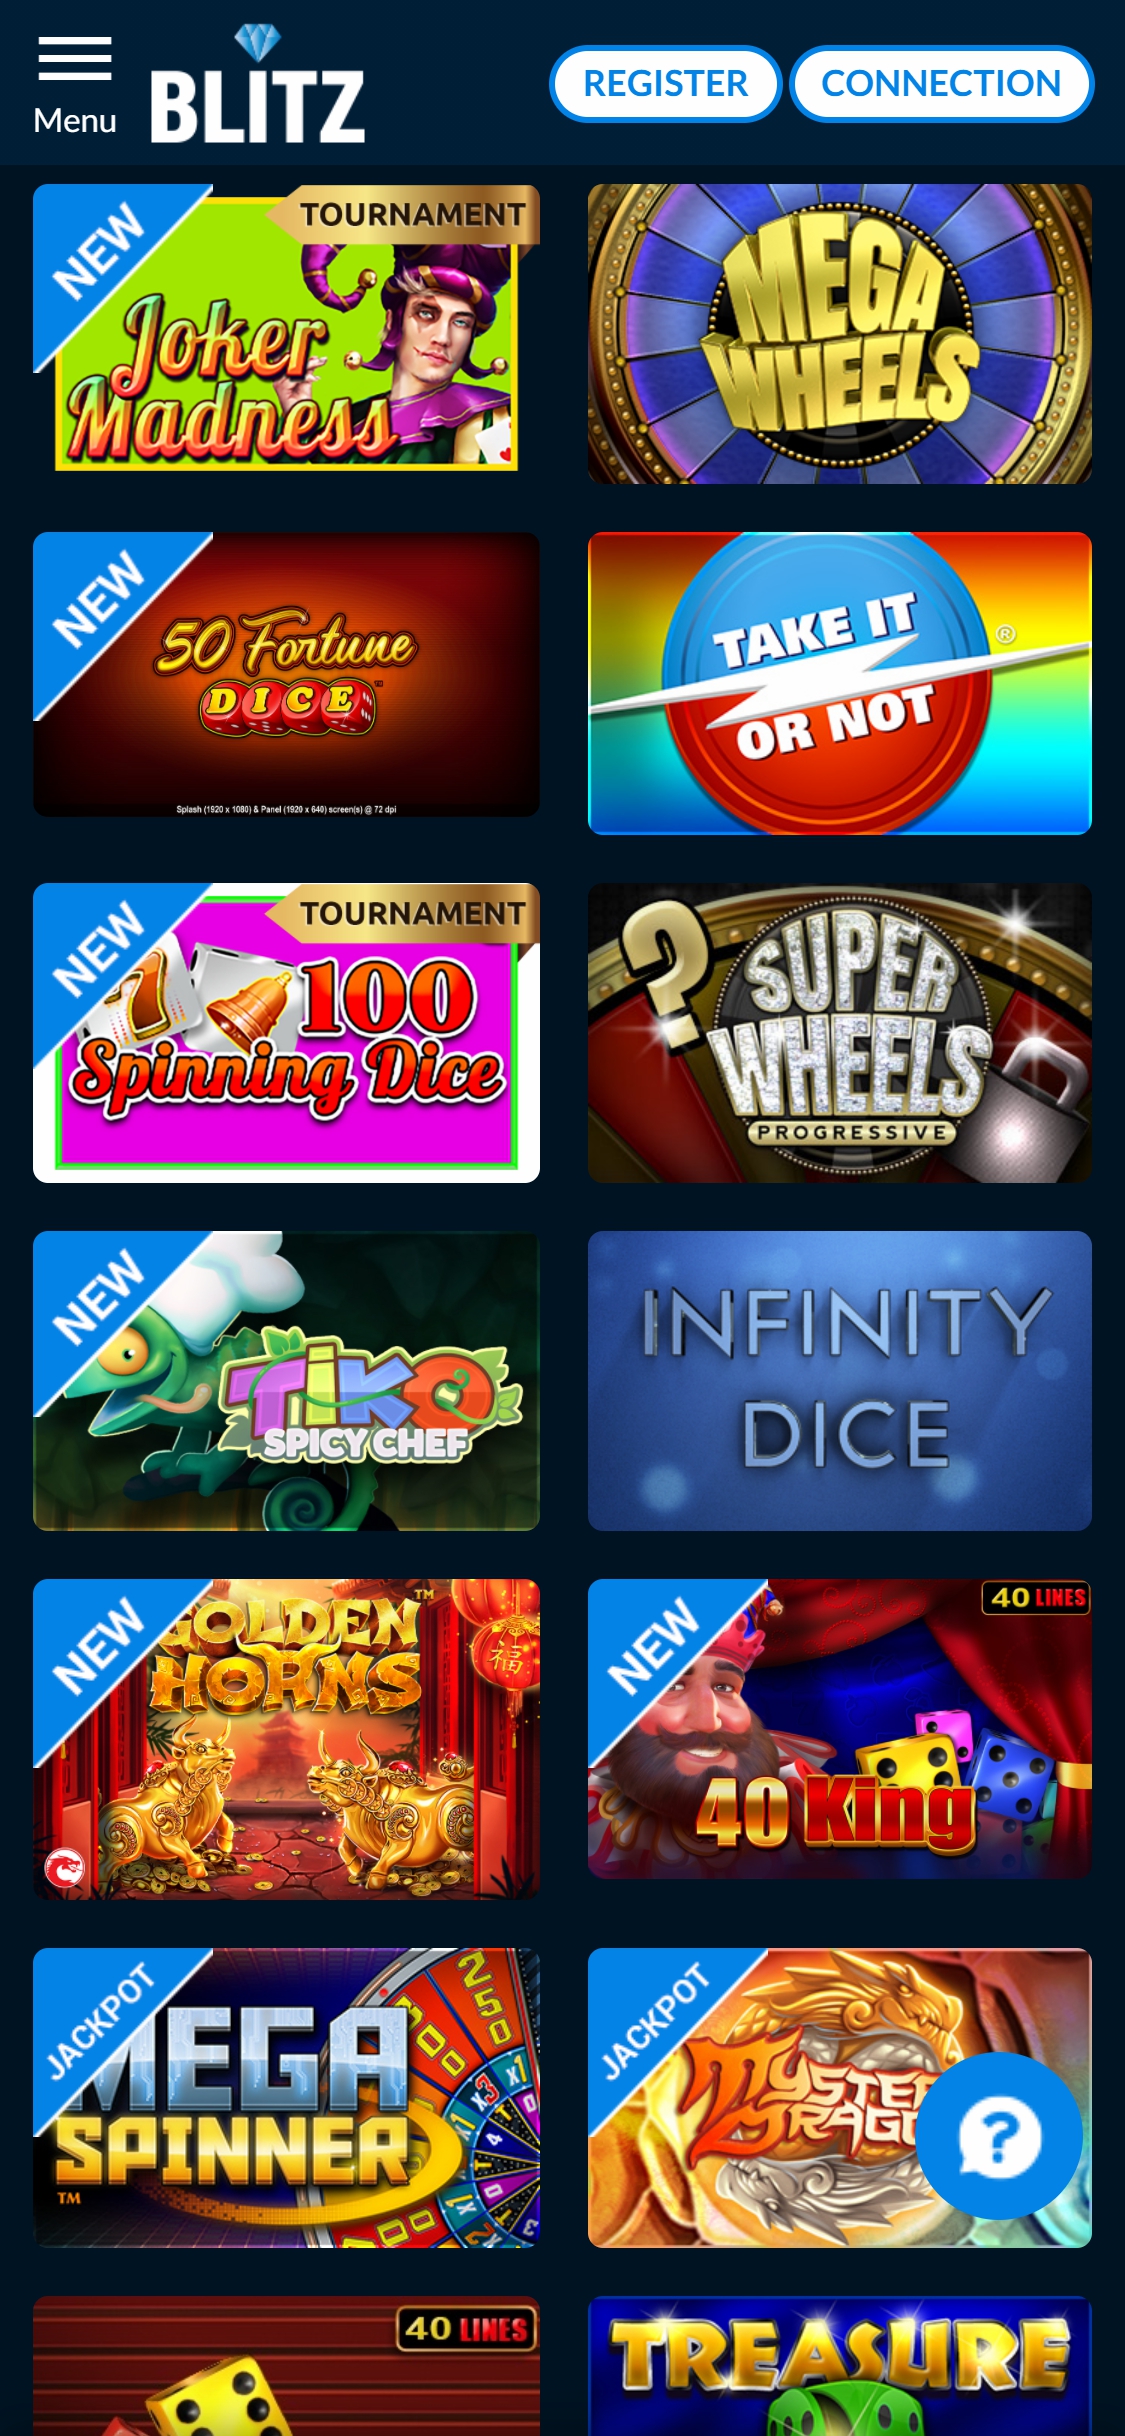 Blitz Casino Mobile Games Review